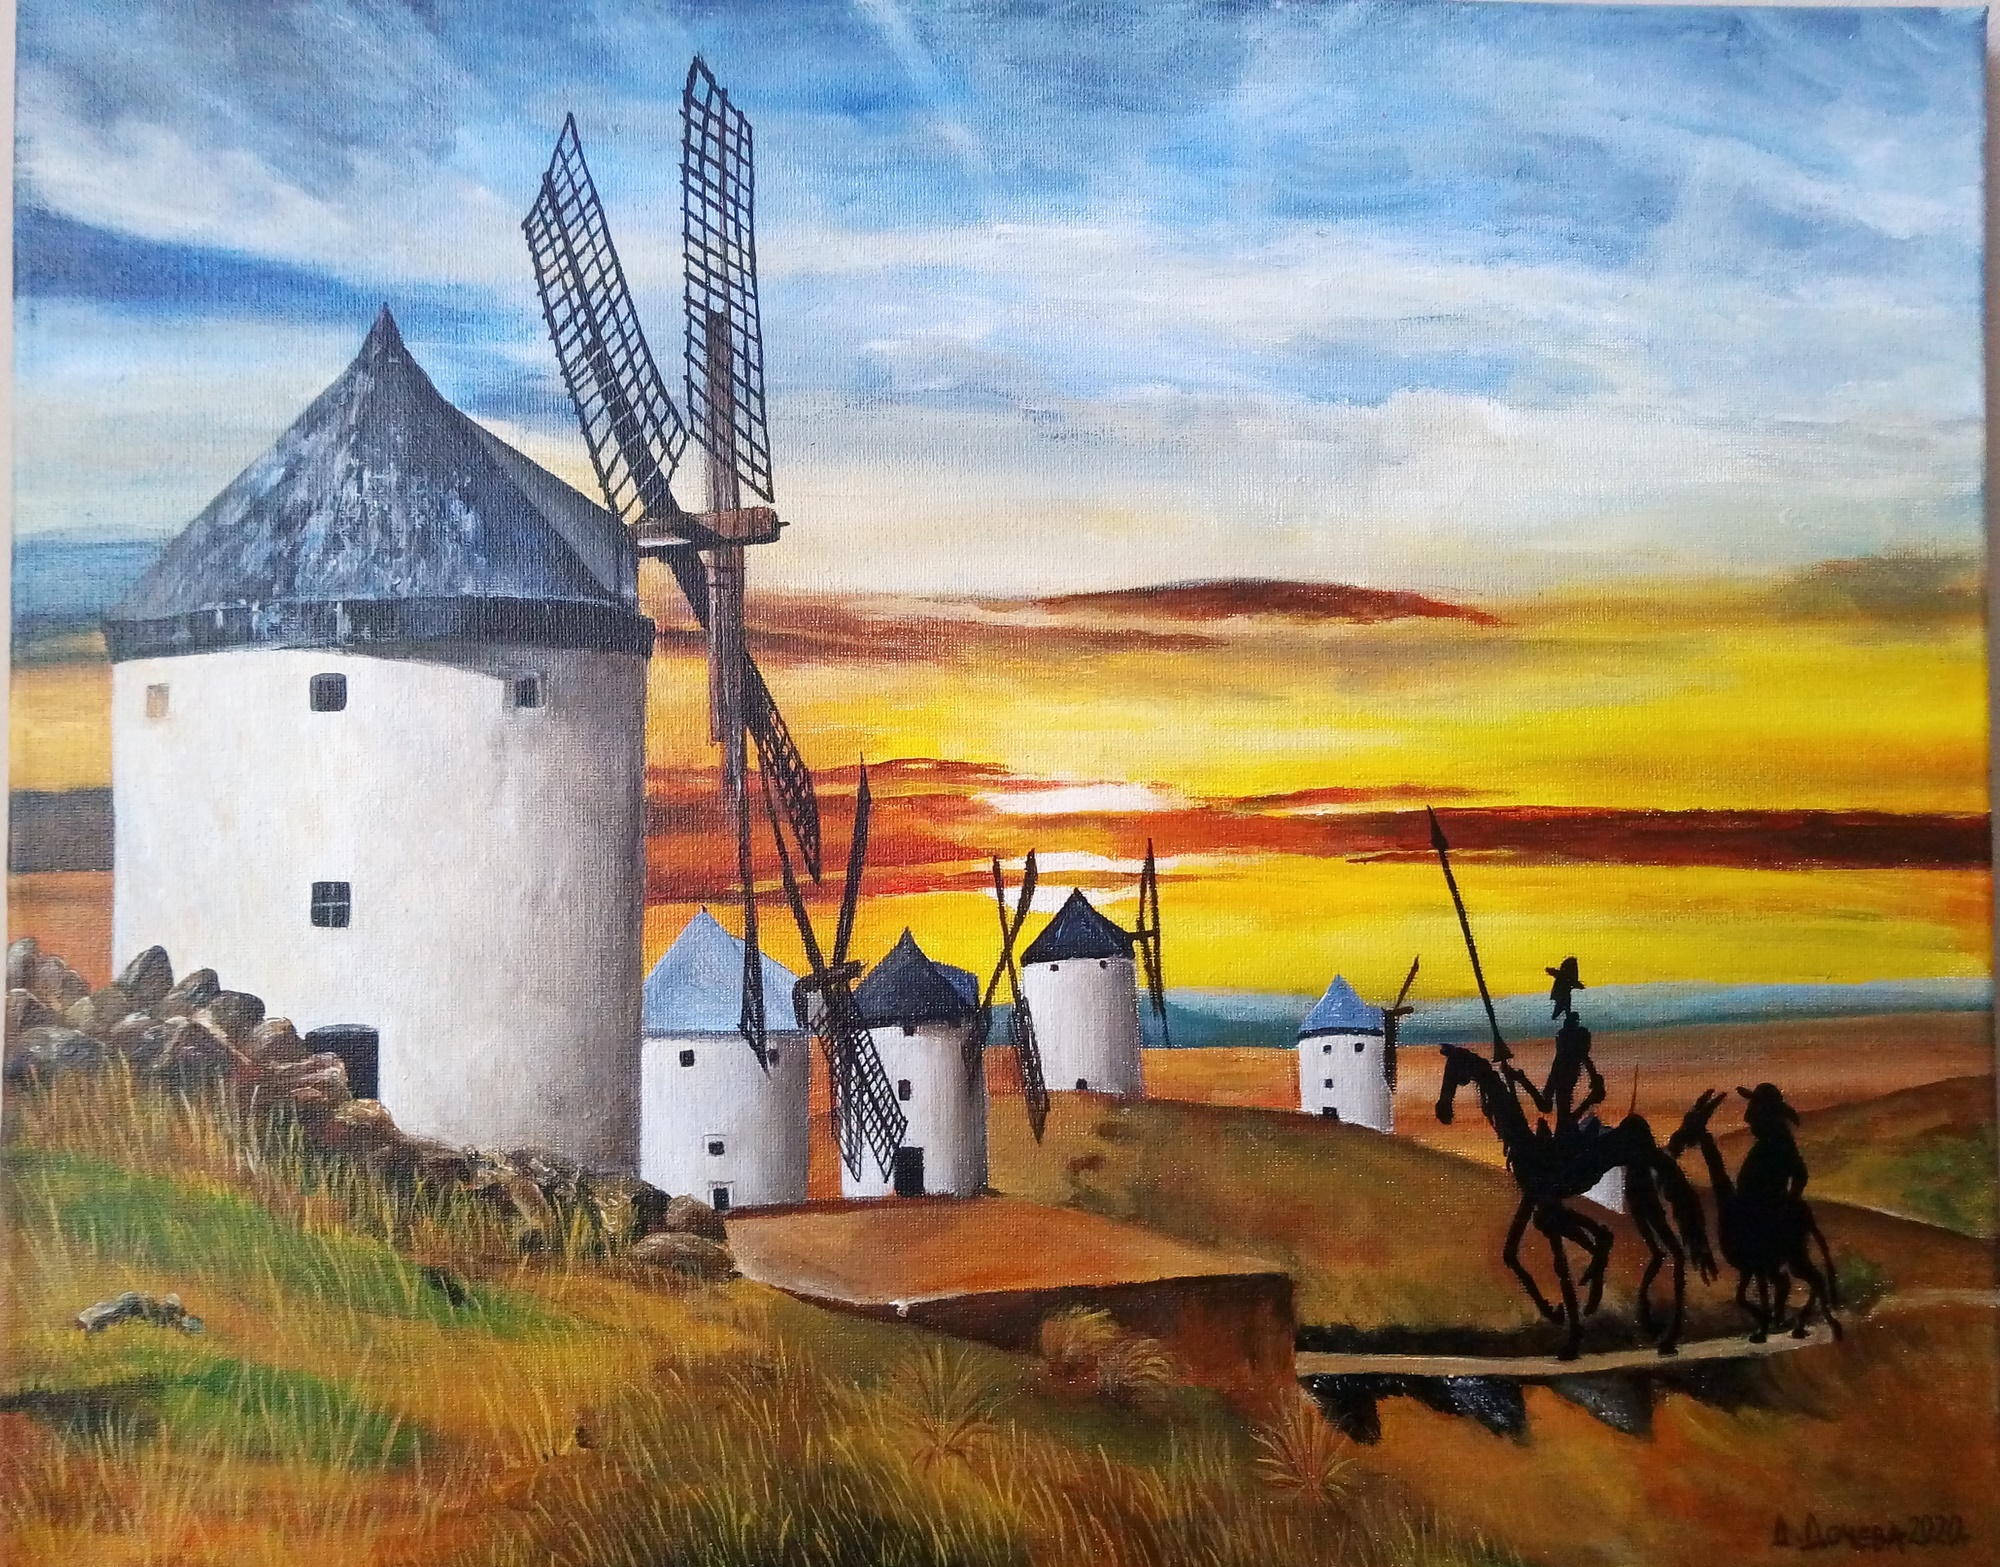 Painting Sunset (windmills)